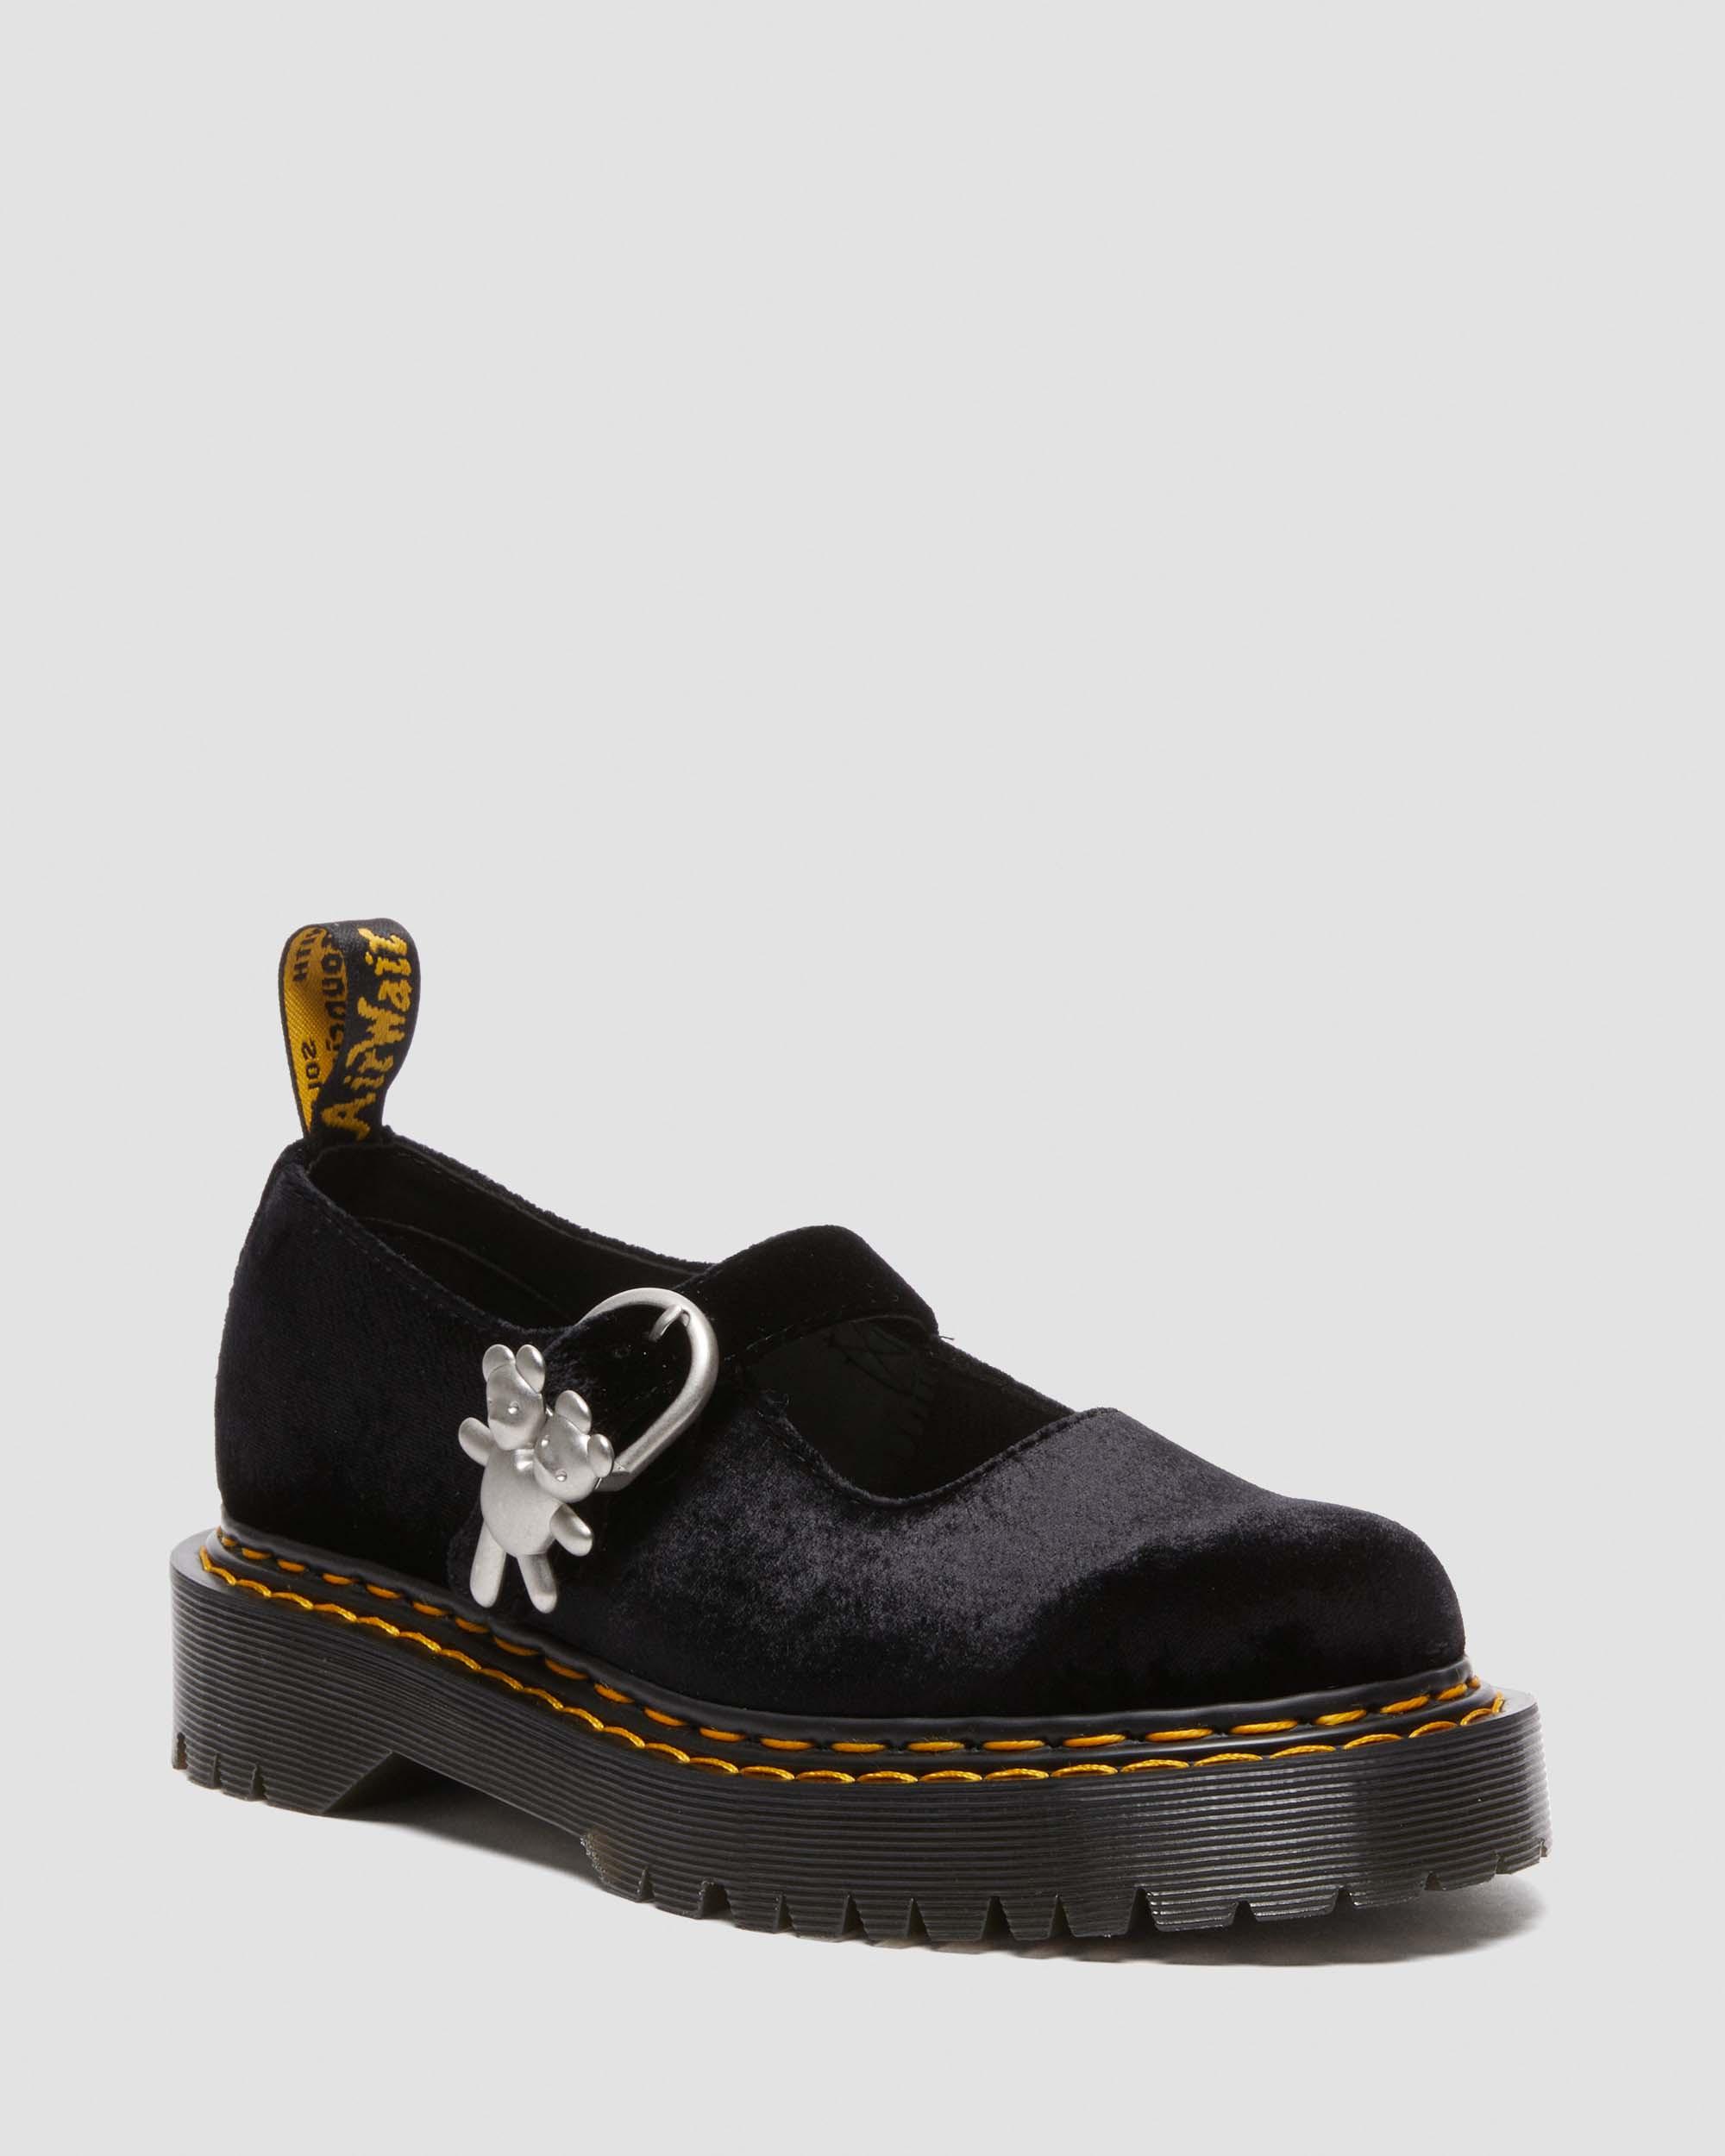 Addina Heaven by Marc Jacobs Velvet Shoes, Black | Dr. Martens